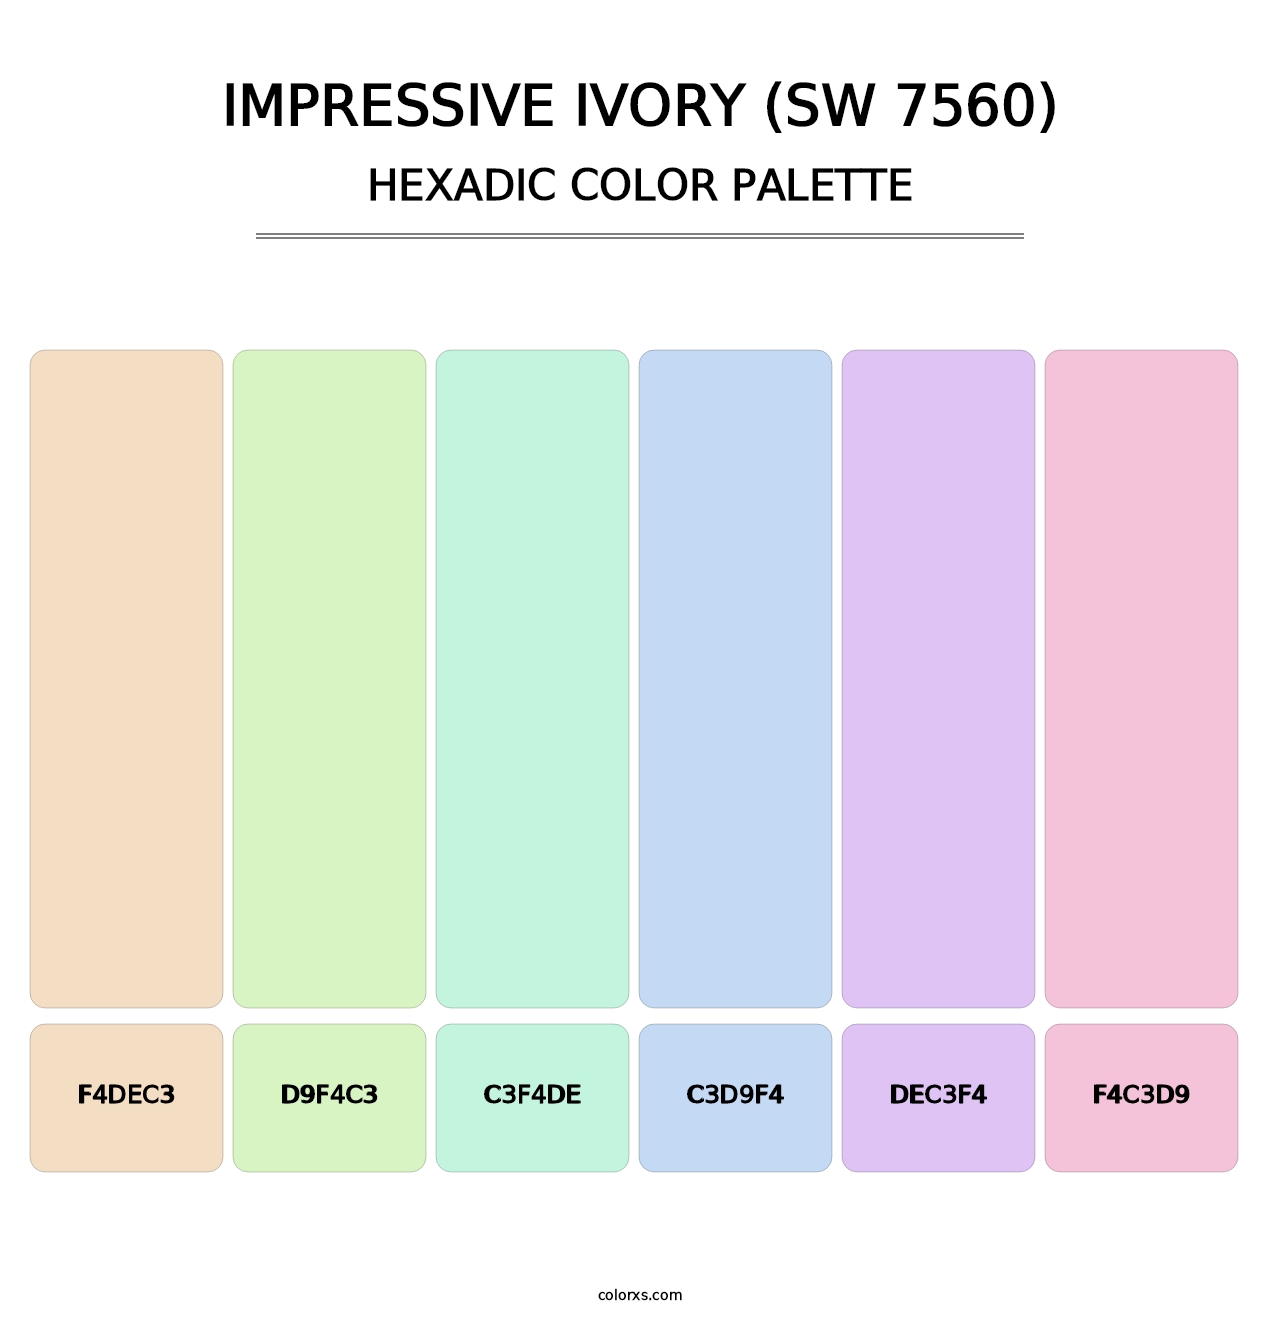 Impressive Ivory (SW 7560) - Hexadic Color Palette